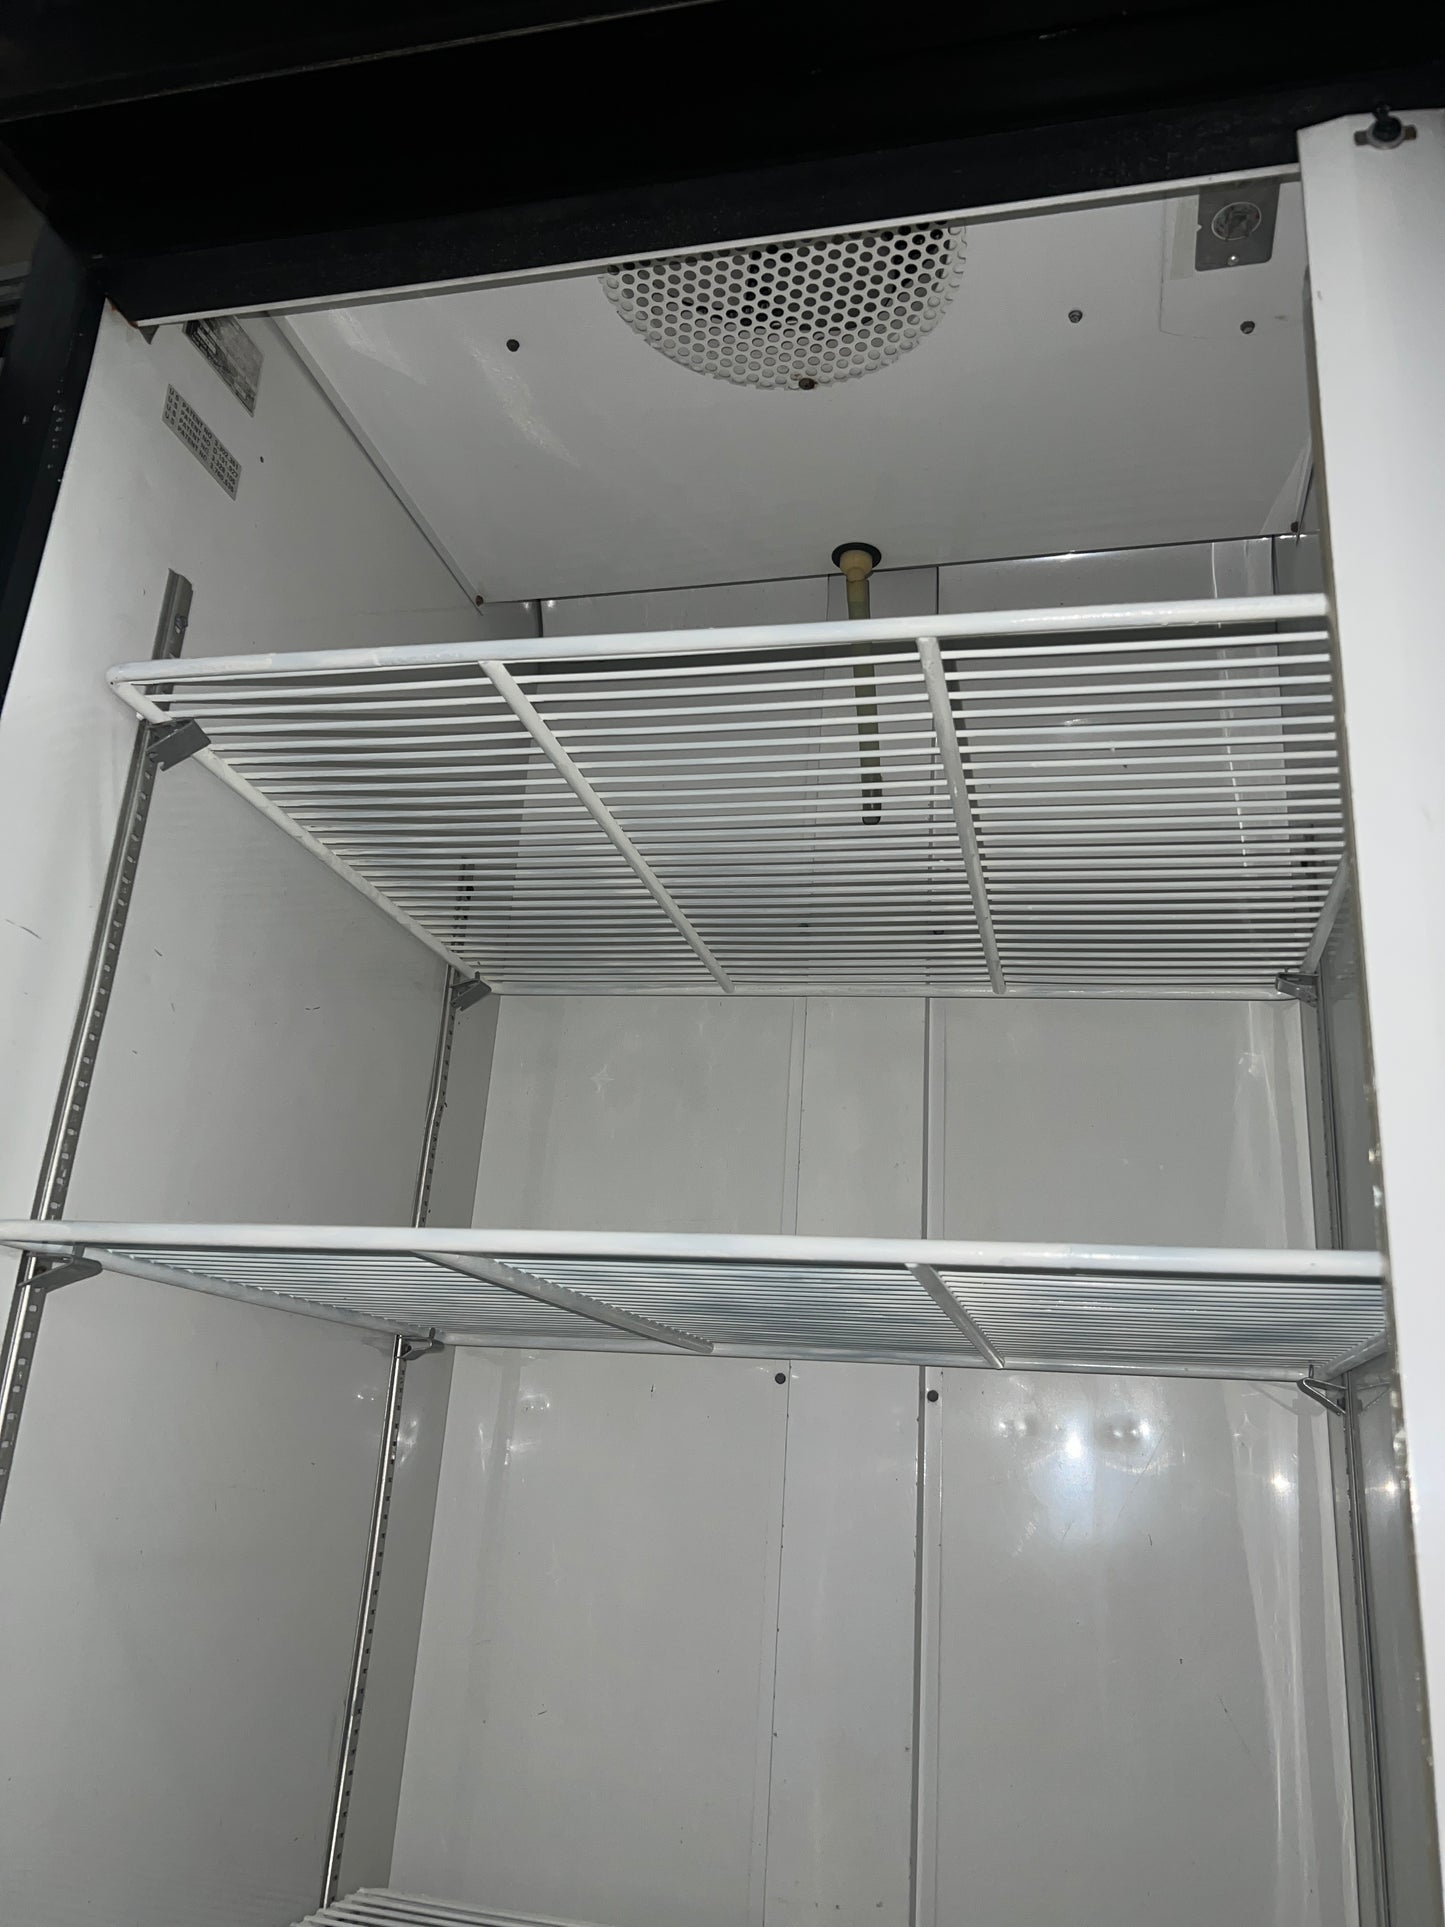 True 30 GDM-26 Single Door Glass Refrigerator,Black, 888782